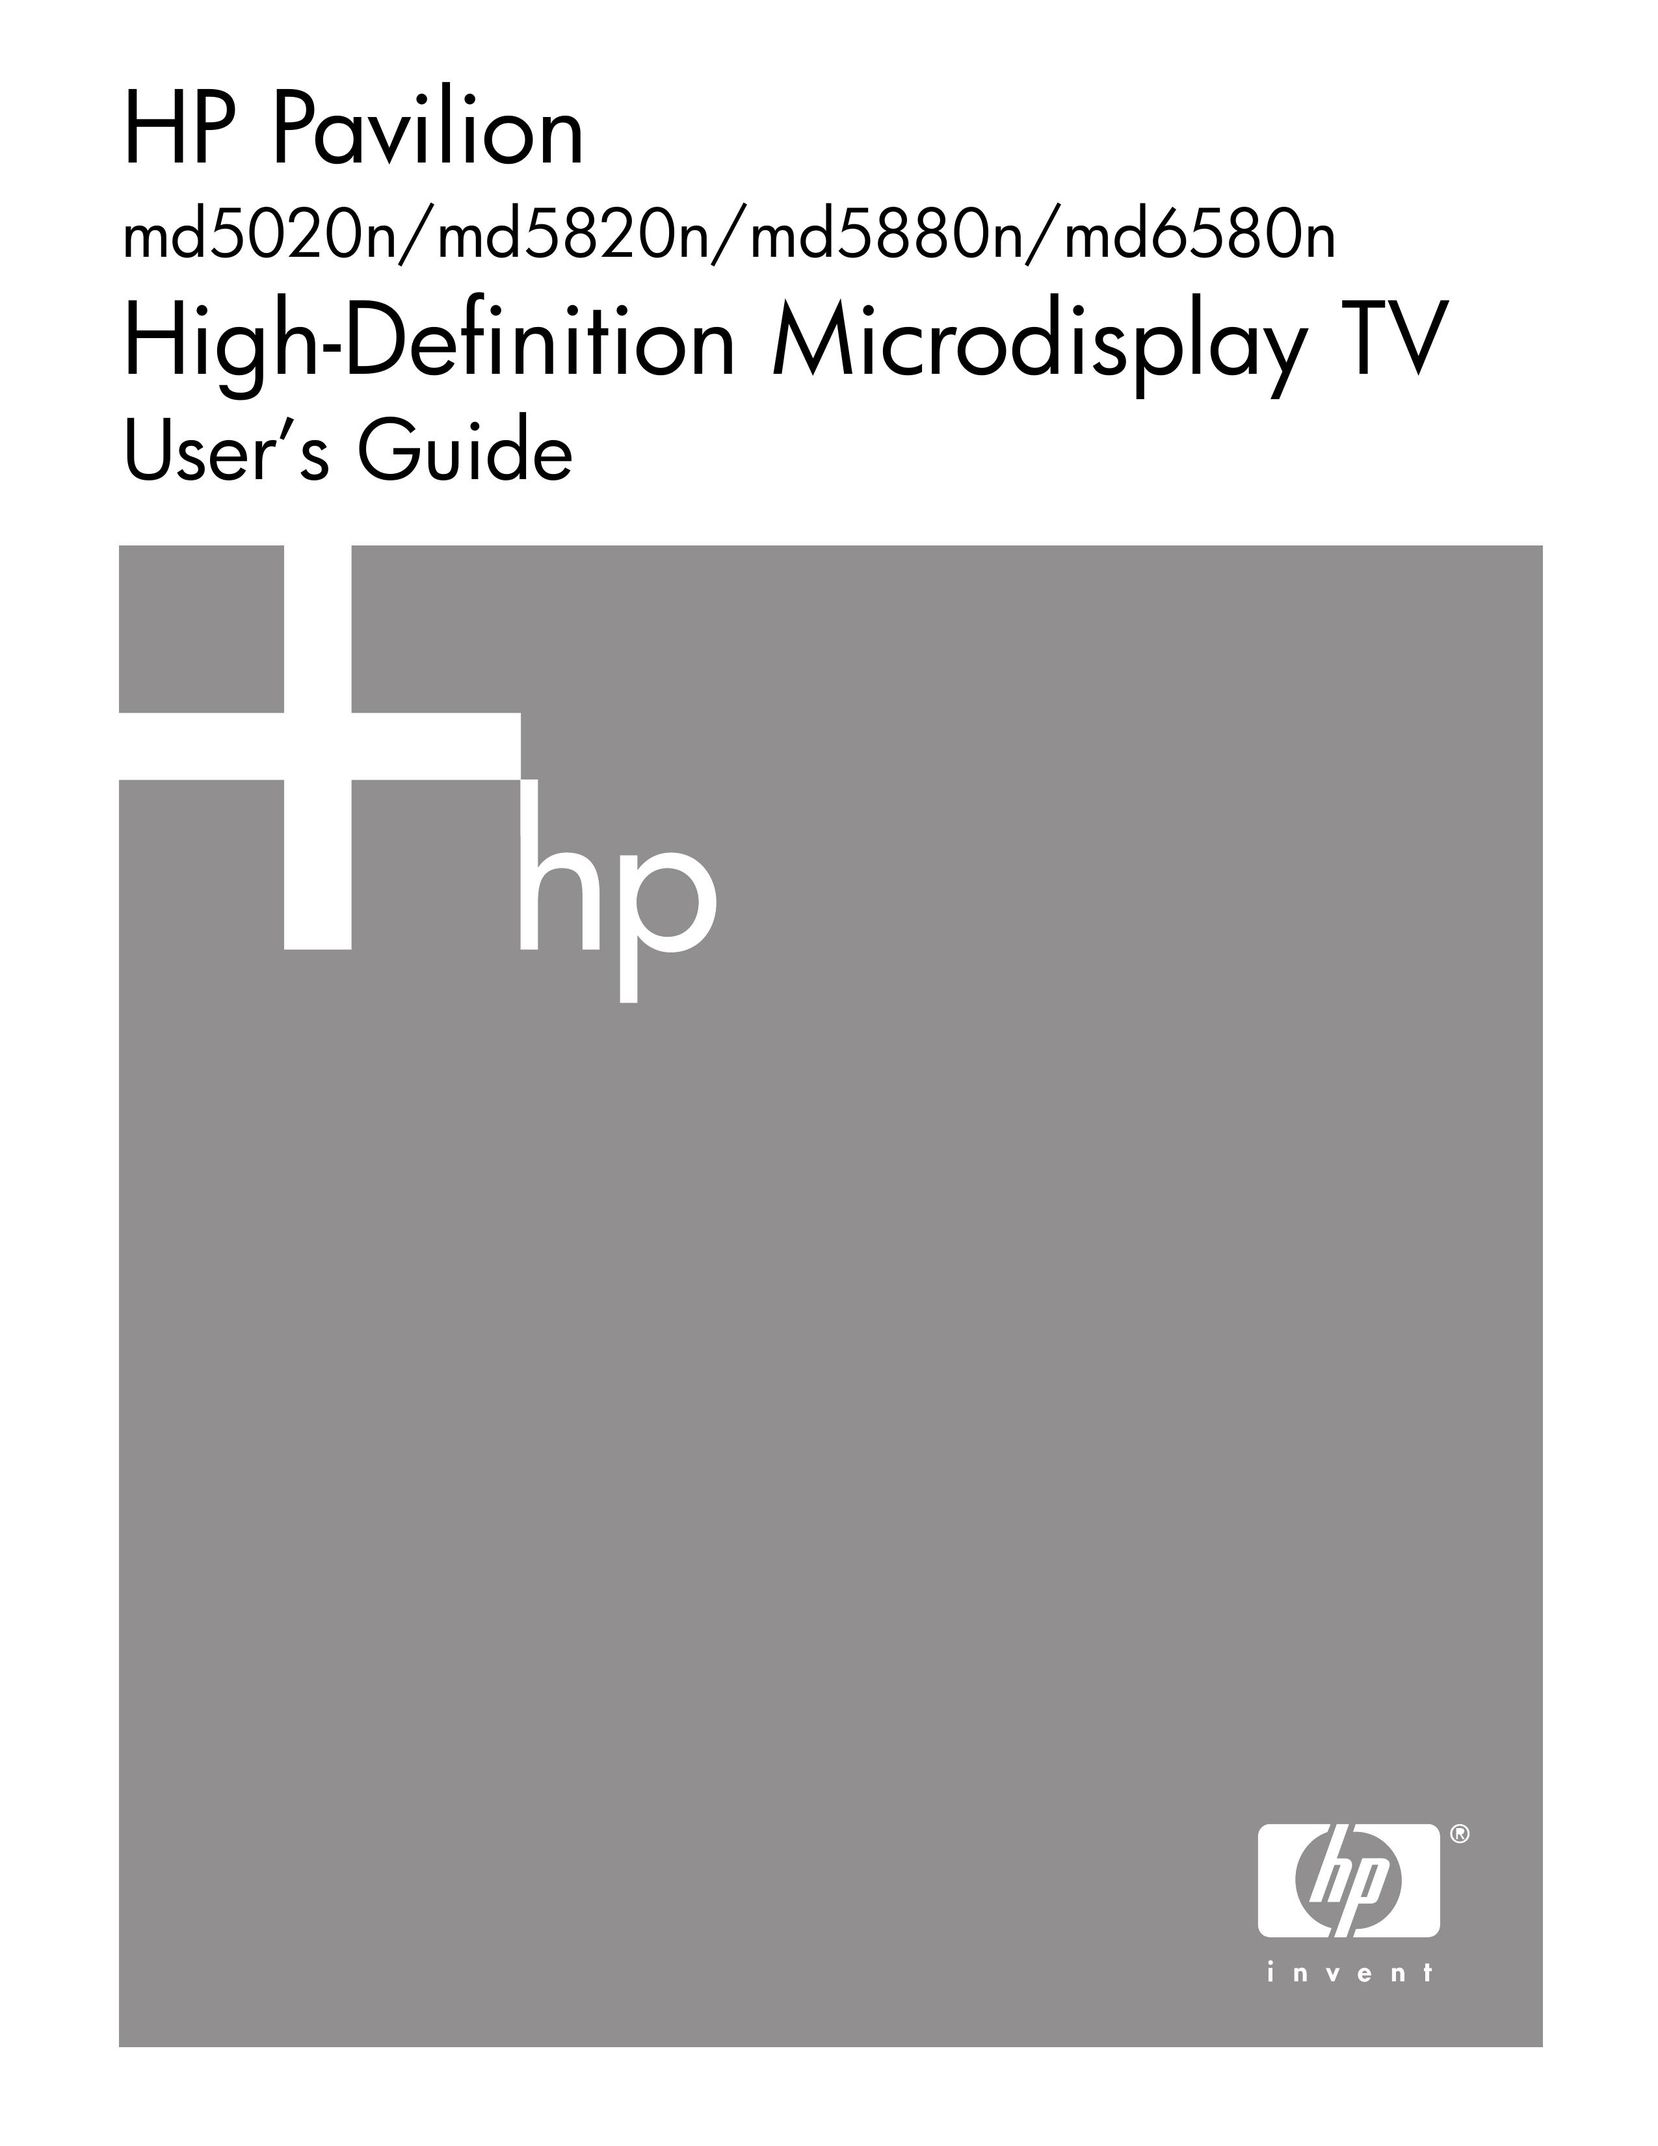 HP (Hewlett-Packard) md5880n Flat Panel Television User Manual